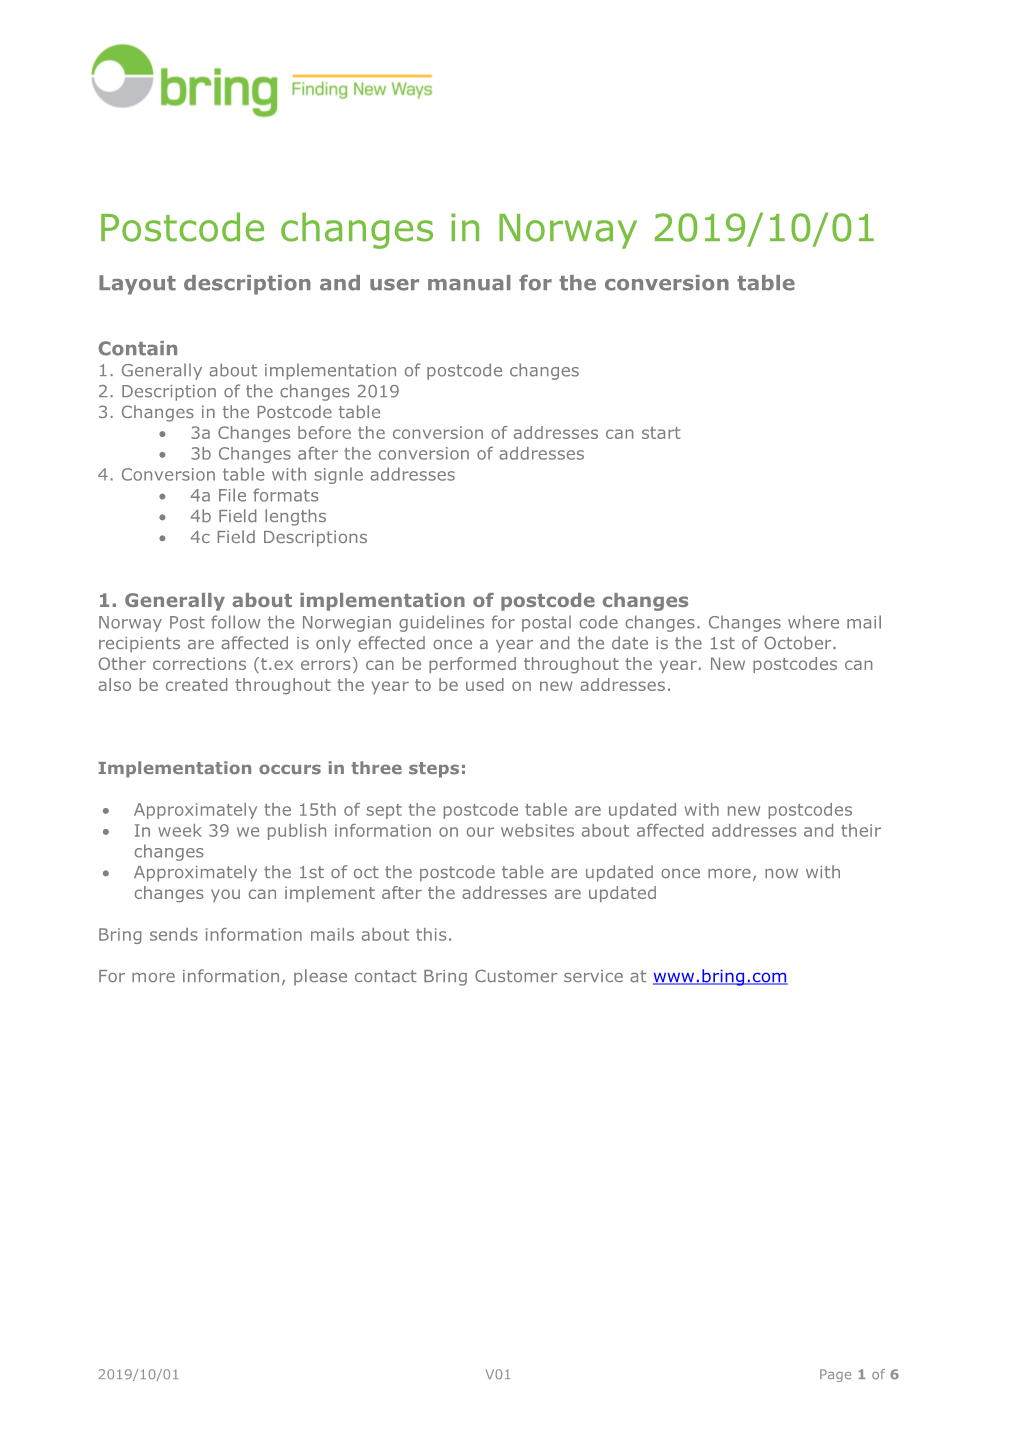 Postcode Changes in Norway 2019/10/01